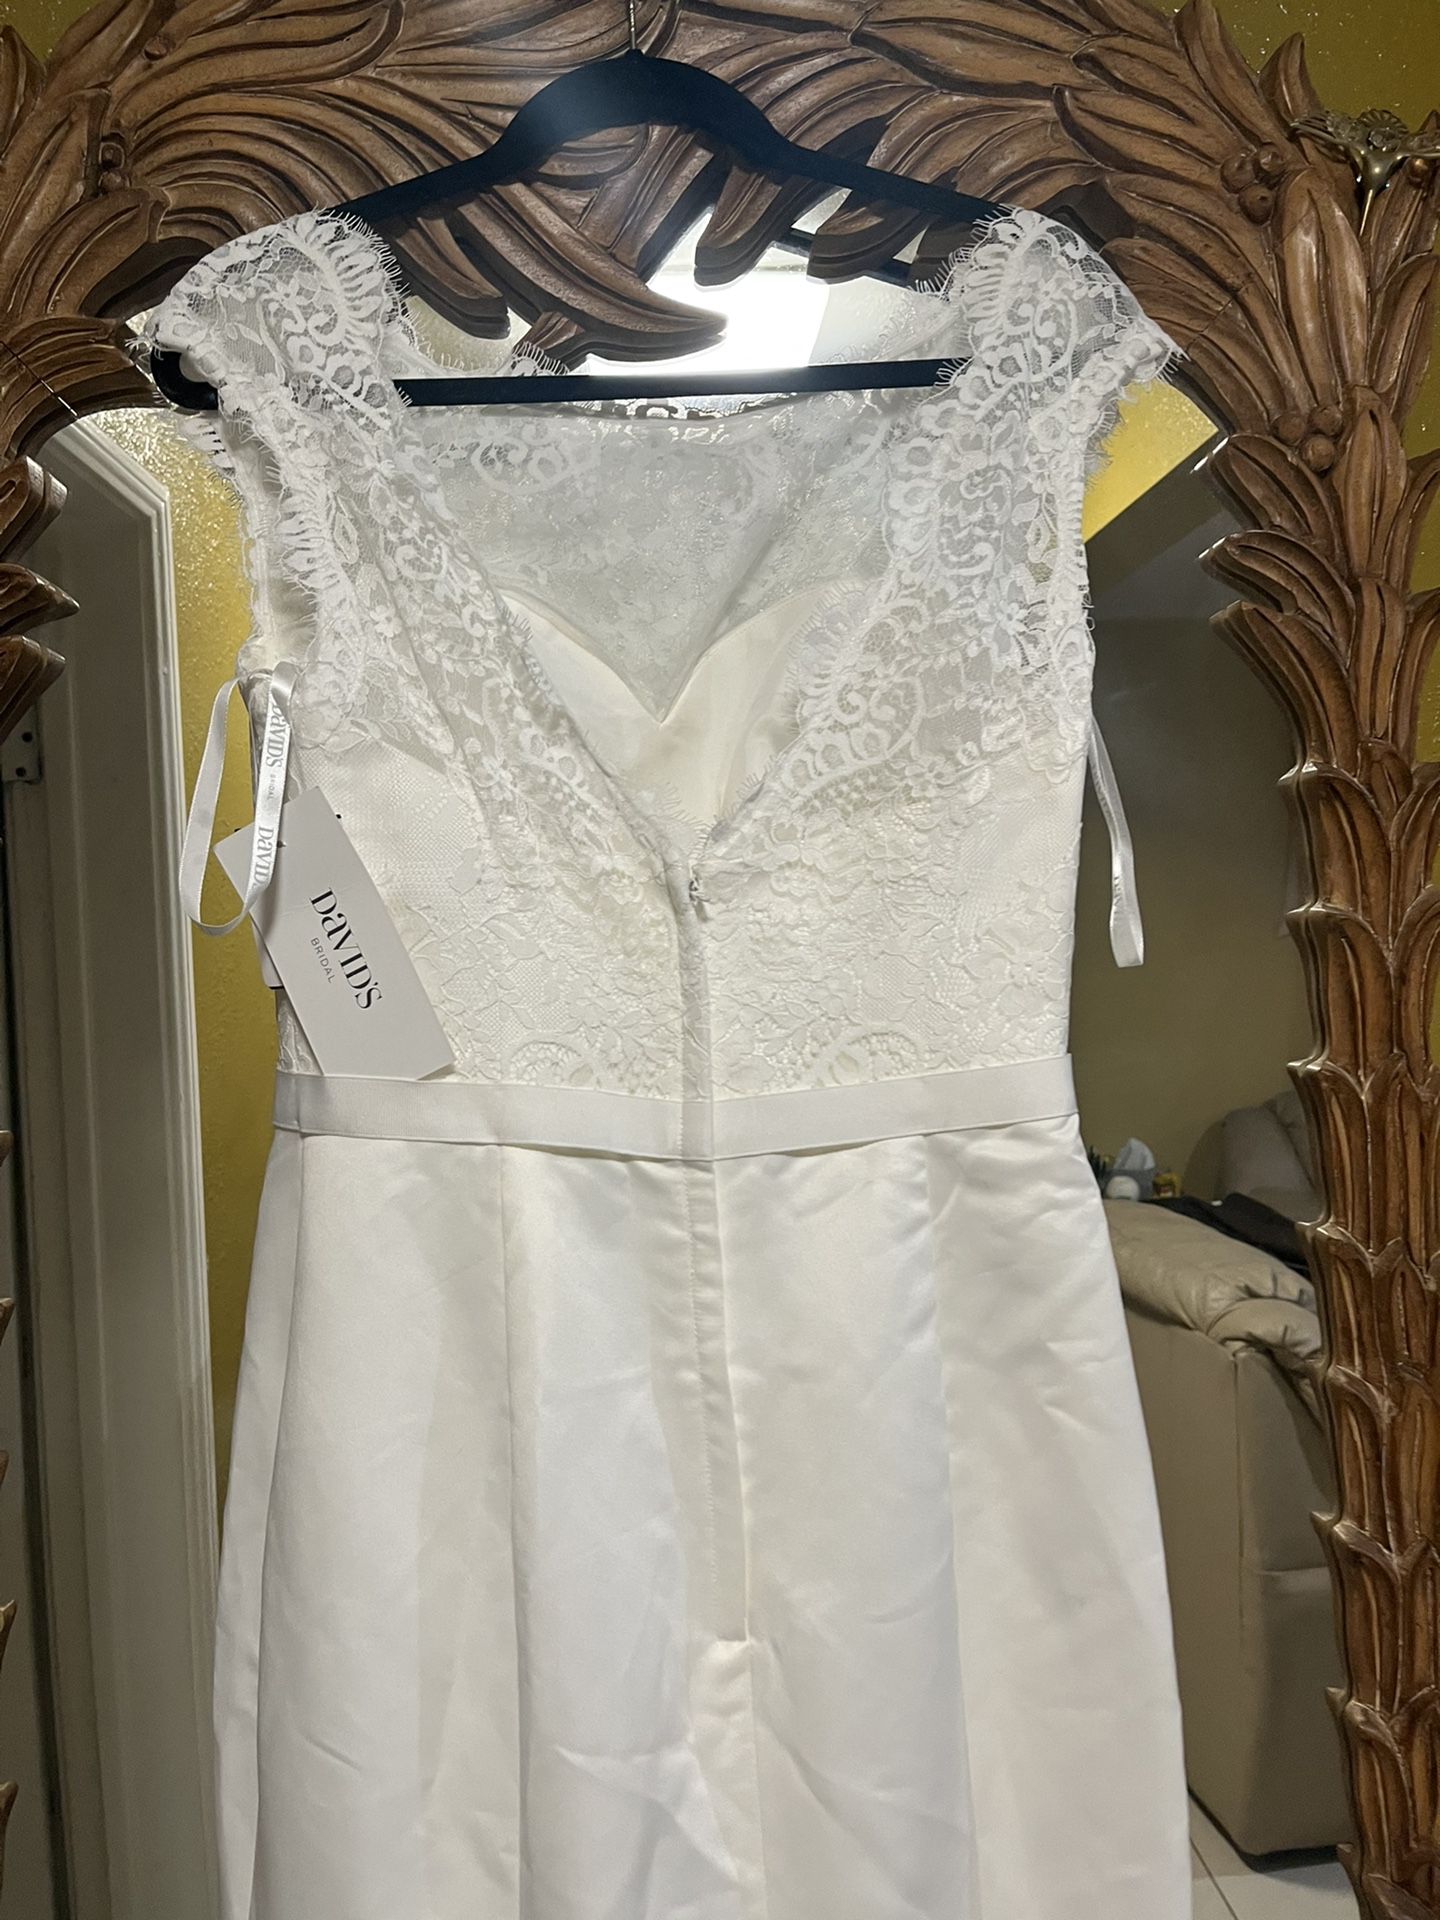 New Wedding Dress - David’s Bridal